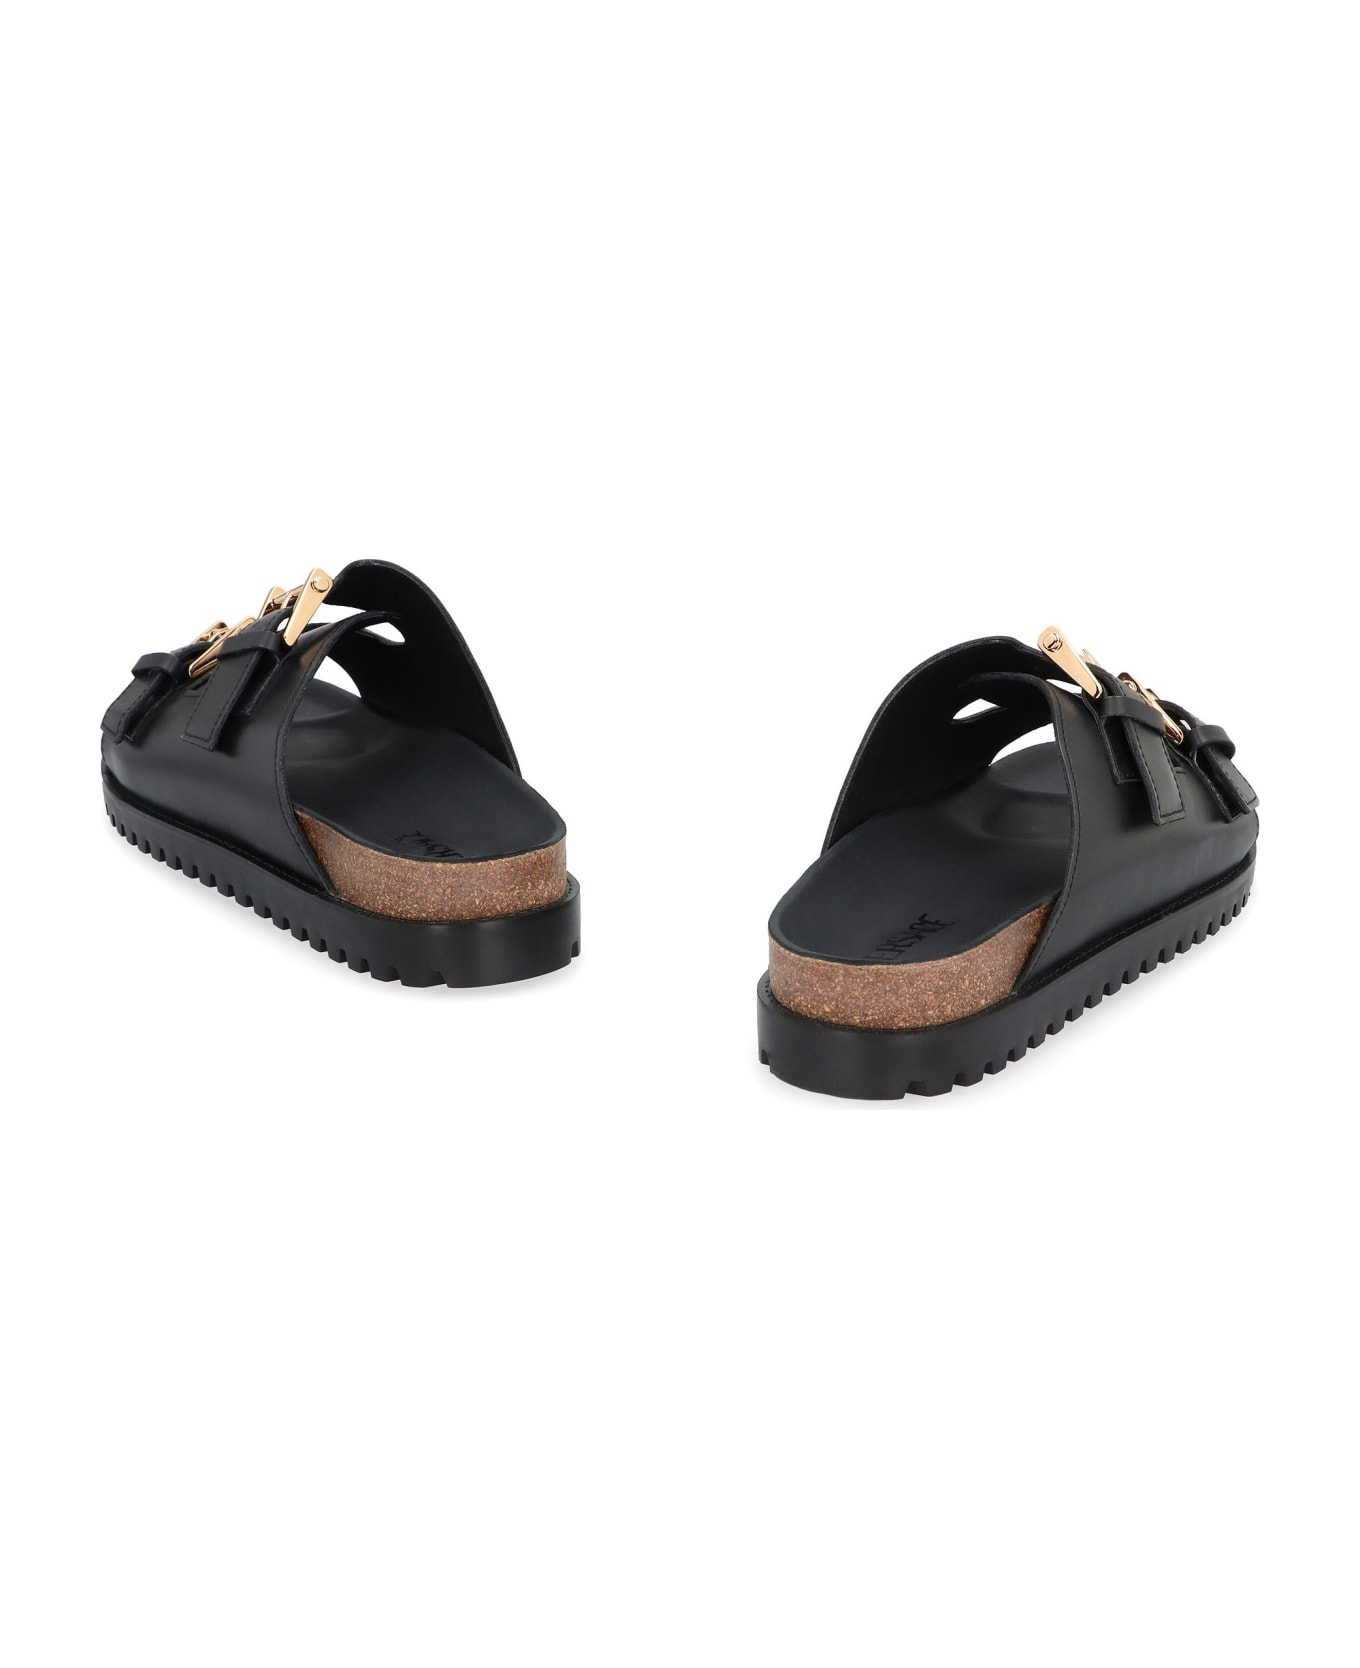 Versace Leather Sandals - black